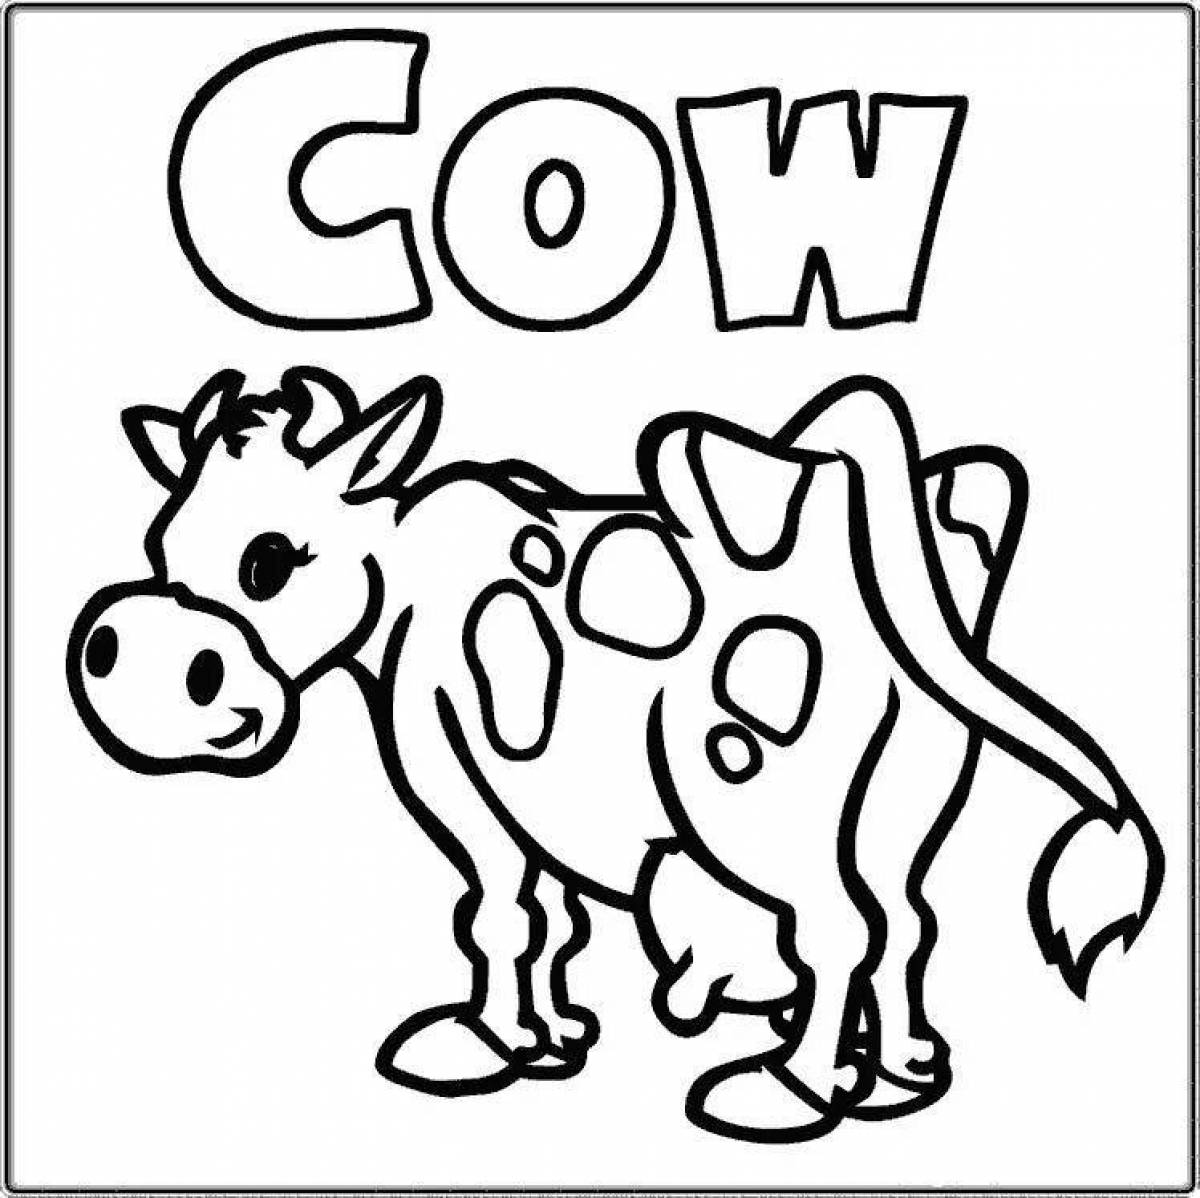 Cow #5